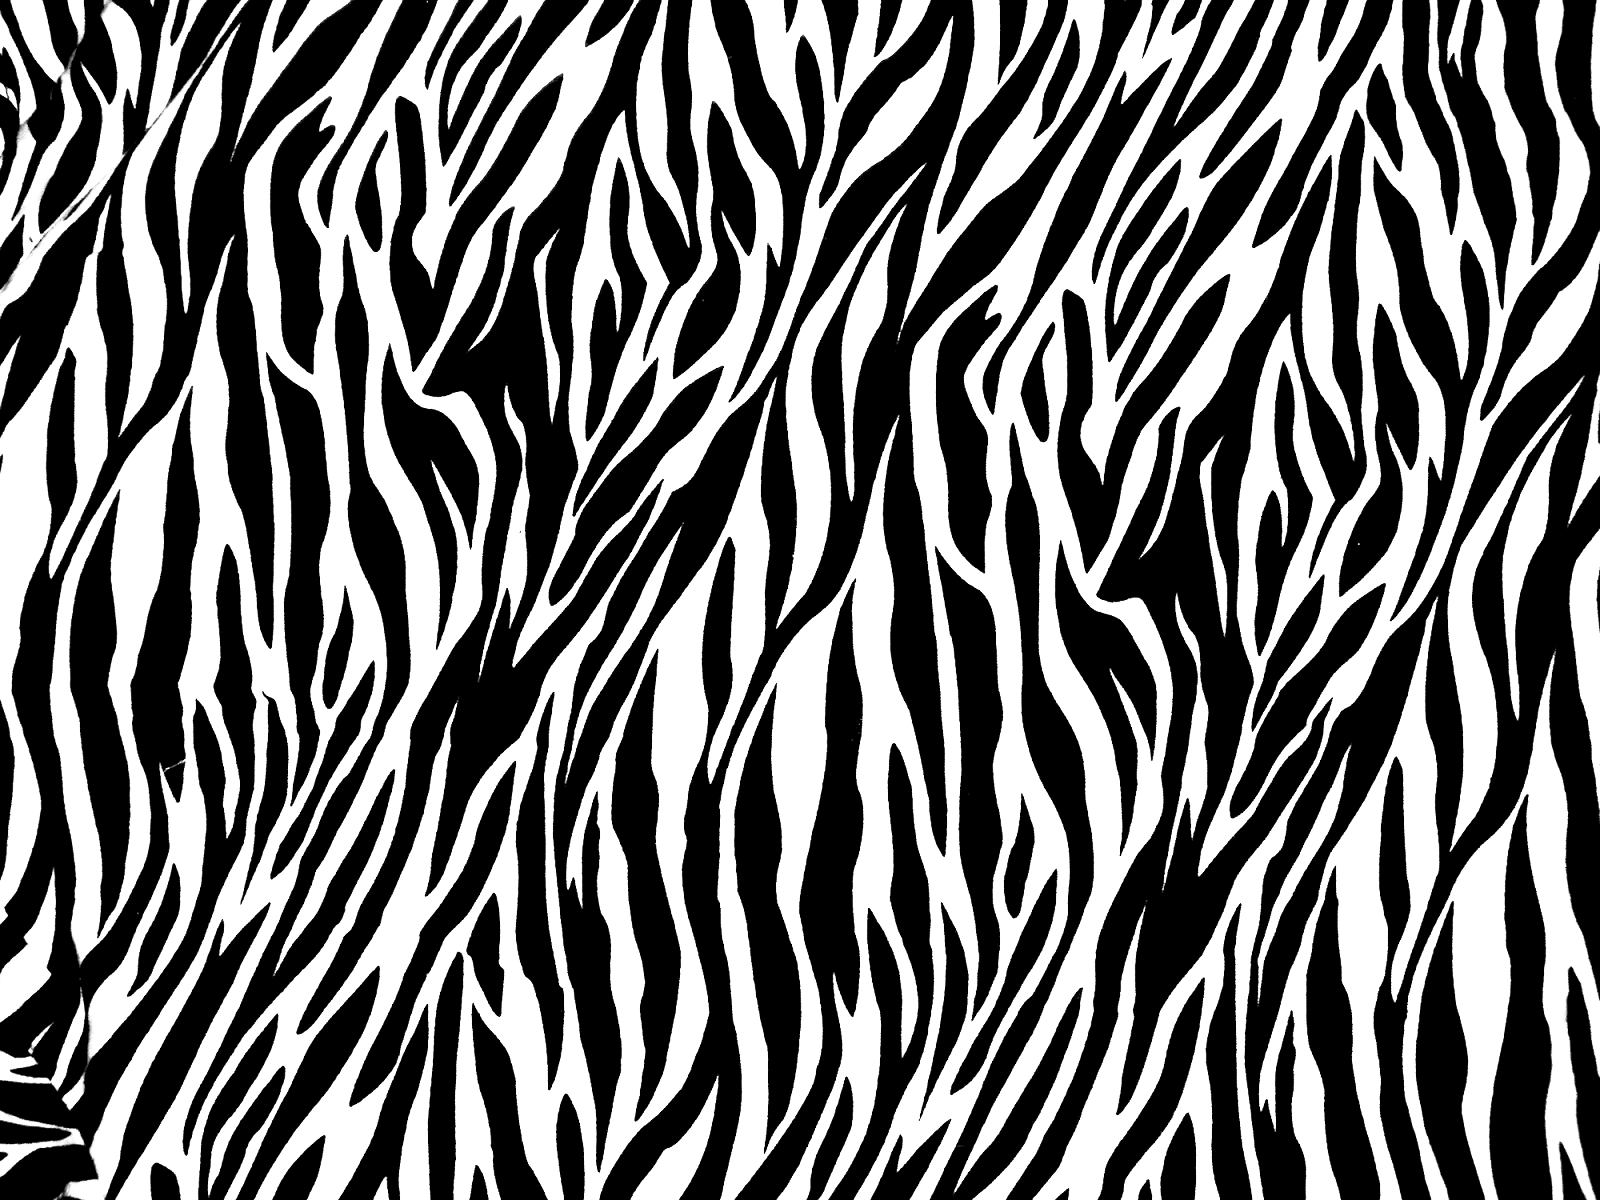 Zebra Print PNG Image Background